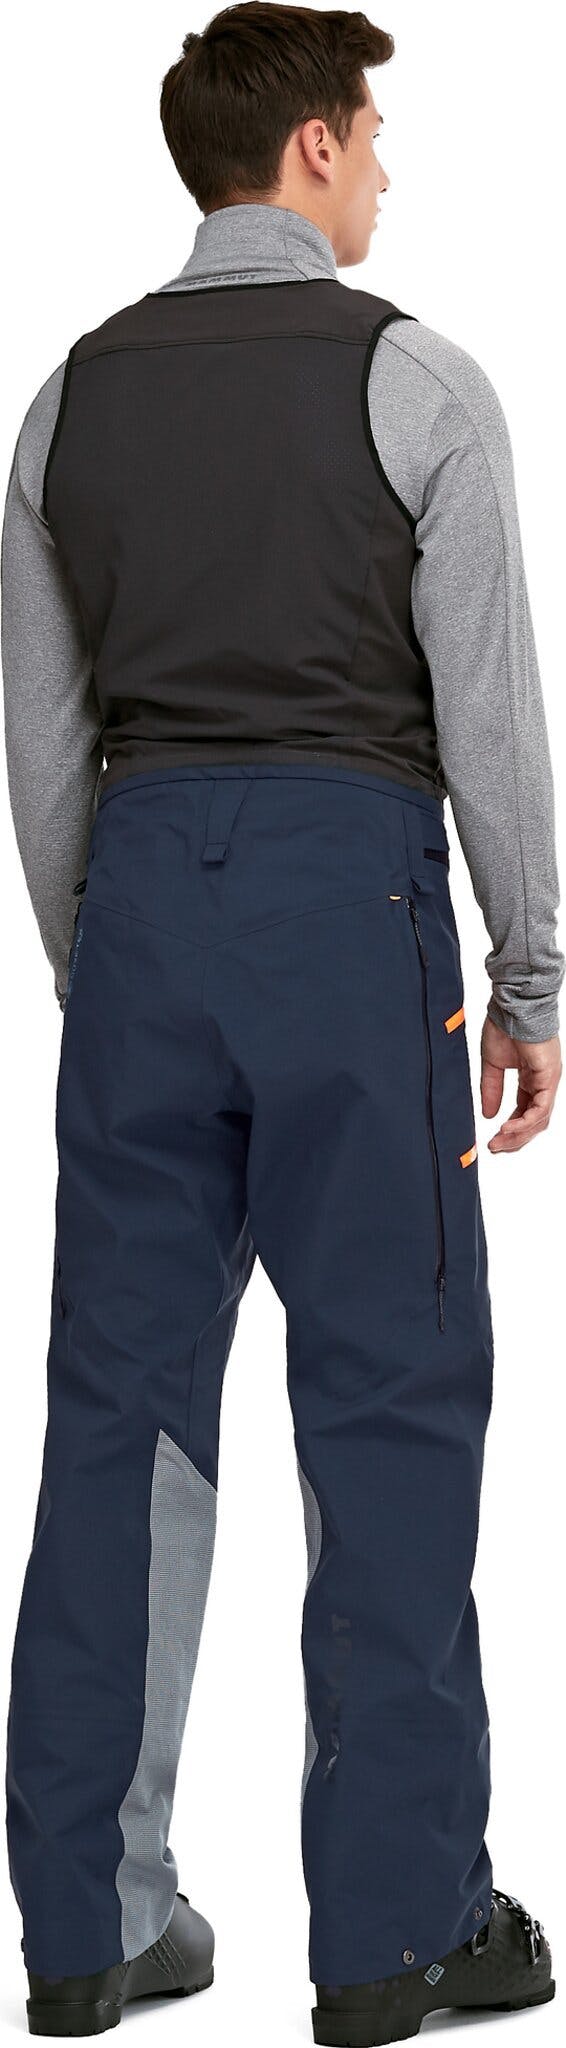 Product gallery image number 3 for product La Liste Pro HS Bib Pants - Men's